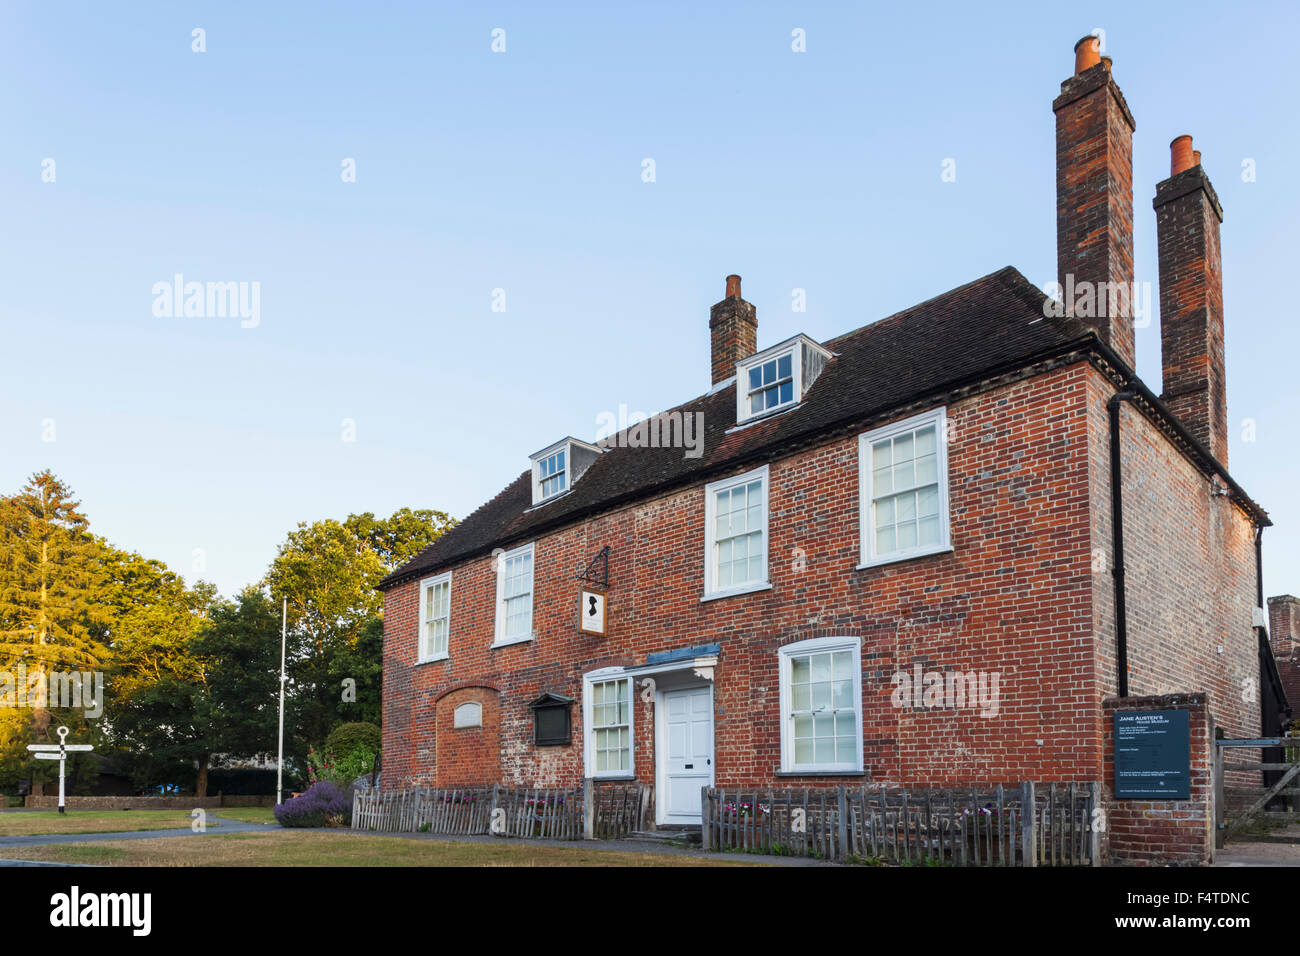 England, Hampshire, Chawton, Jane Austen's House Stock Photo